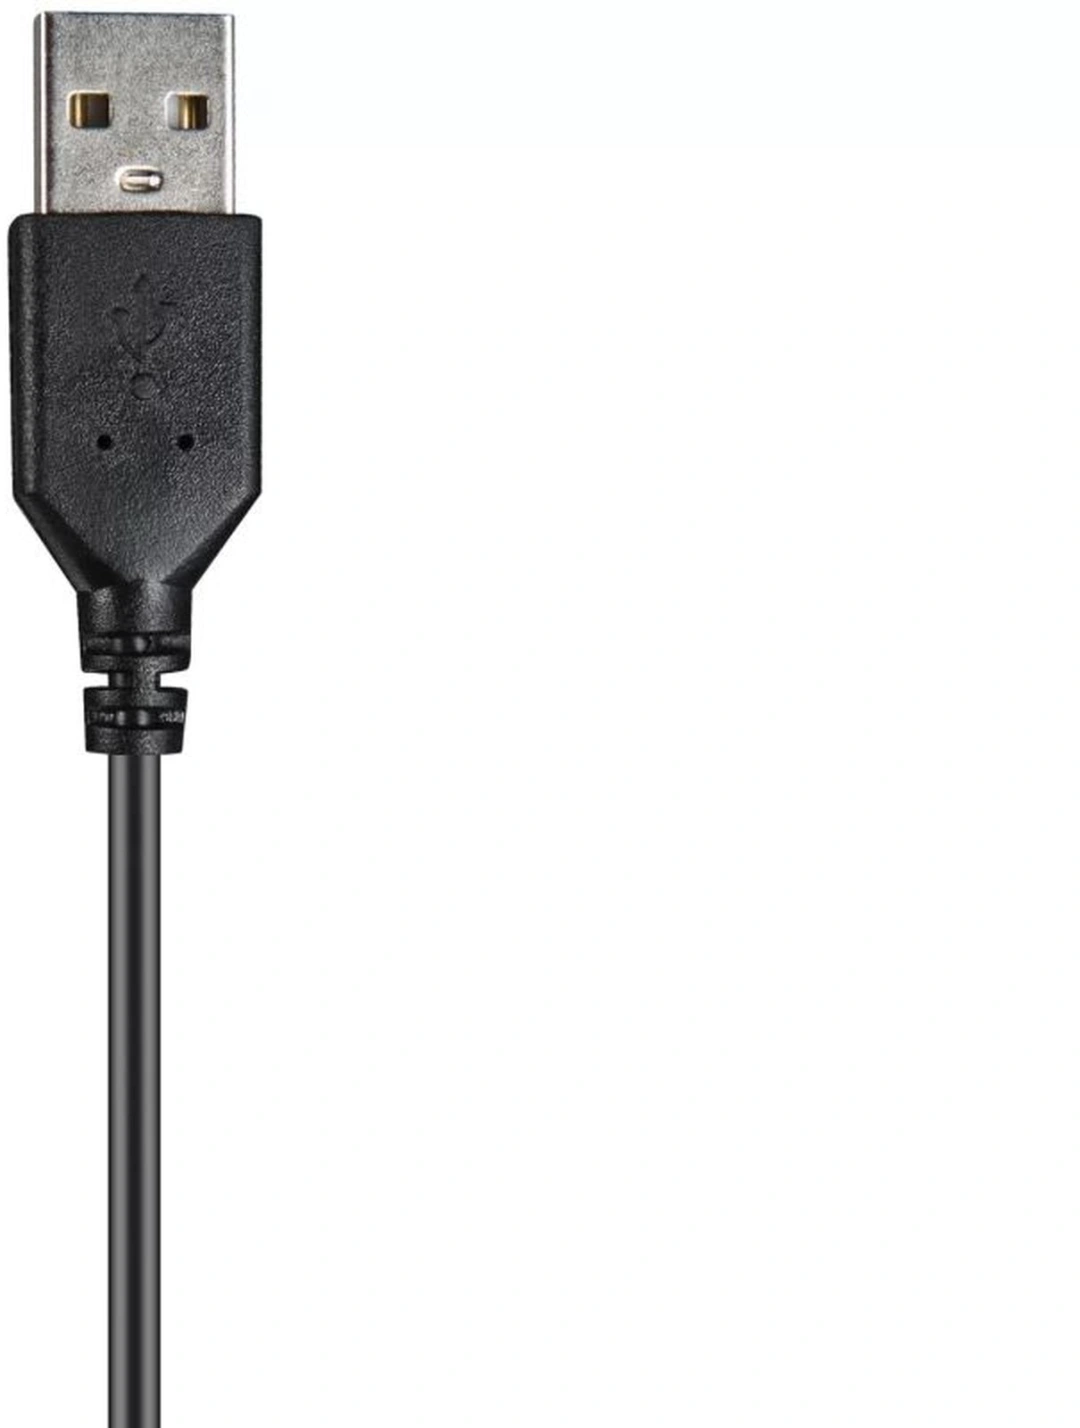 Sandberg USB Chat Headset 126-16, černá